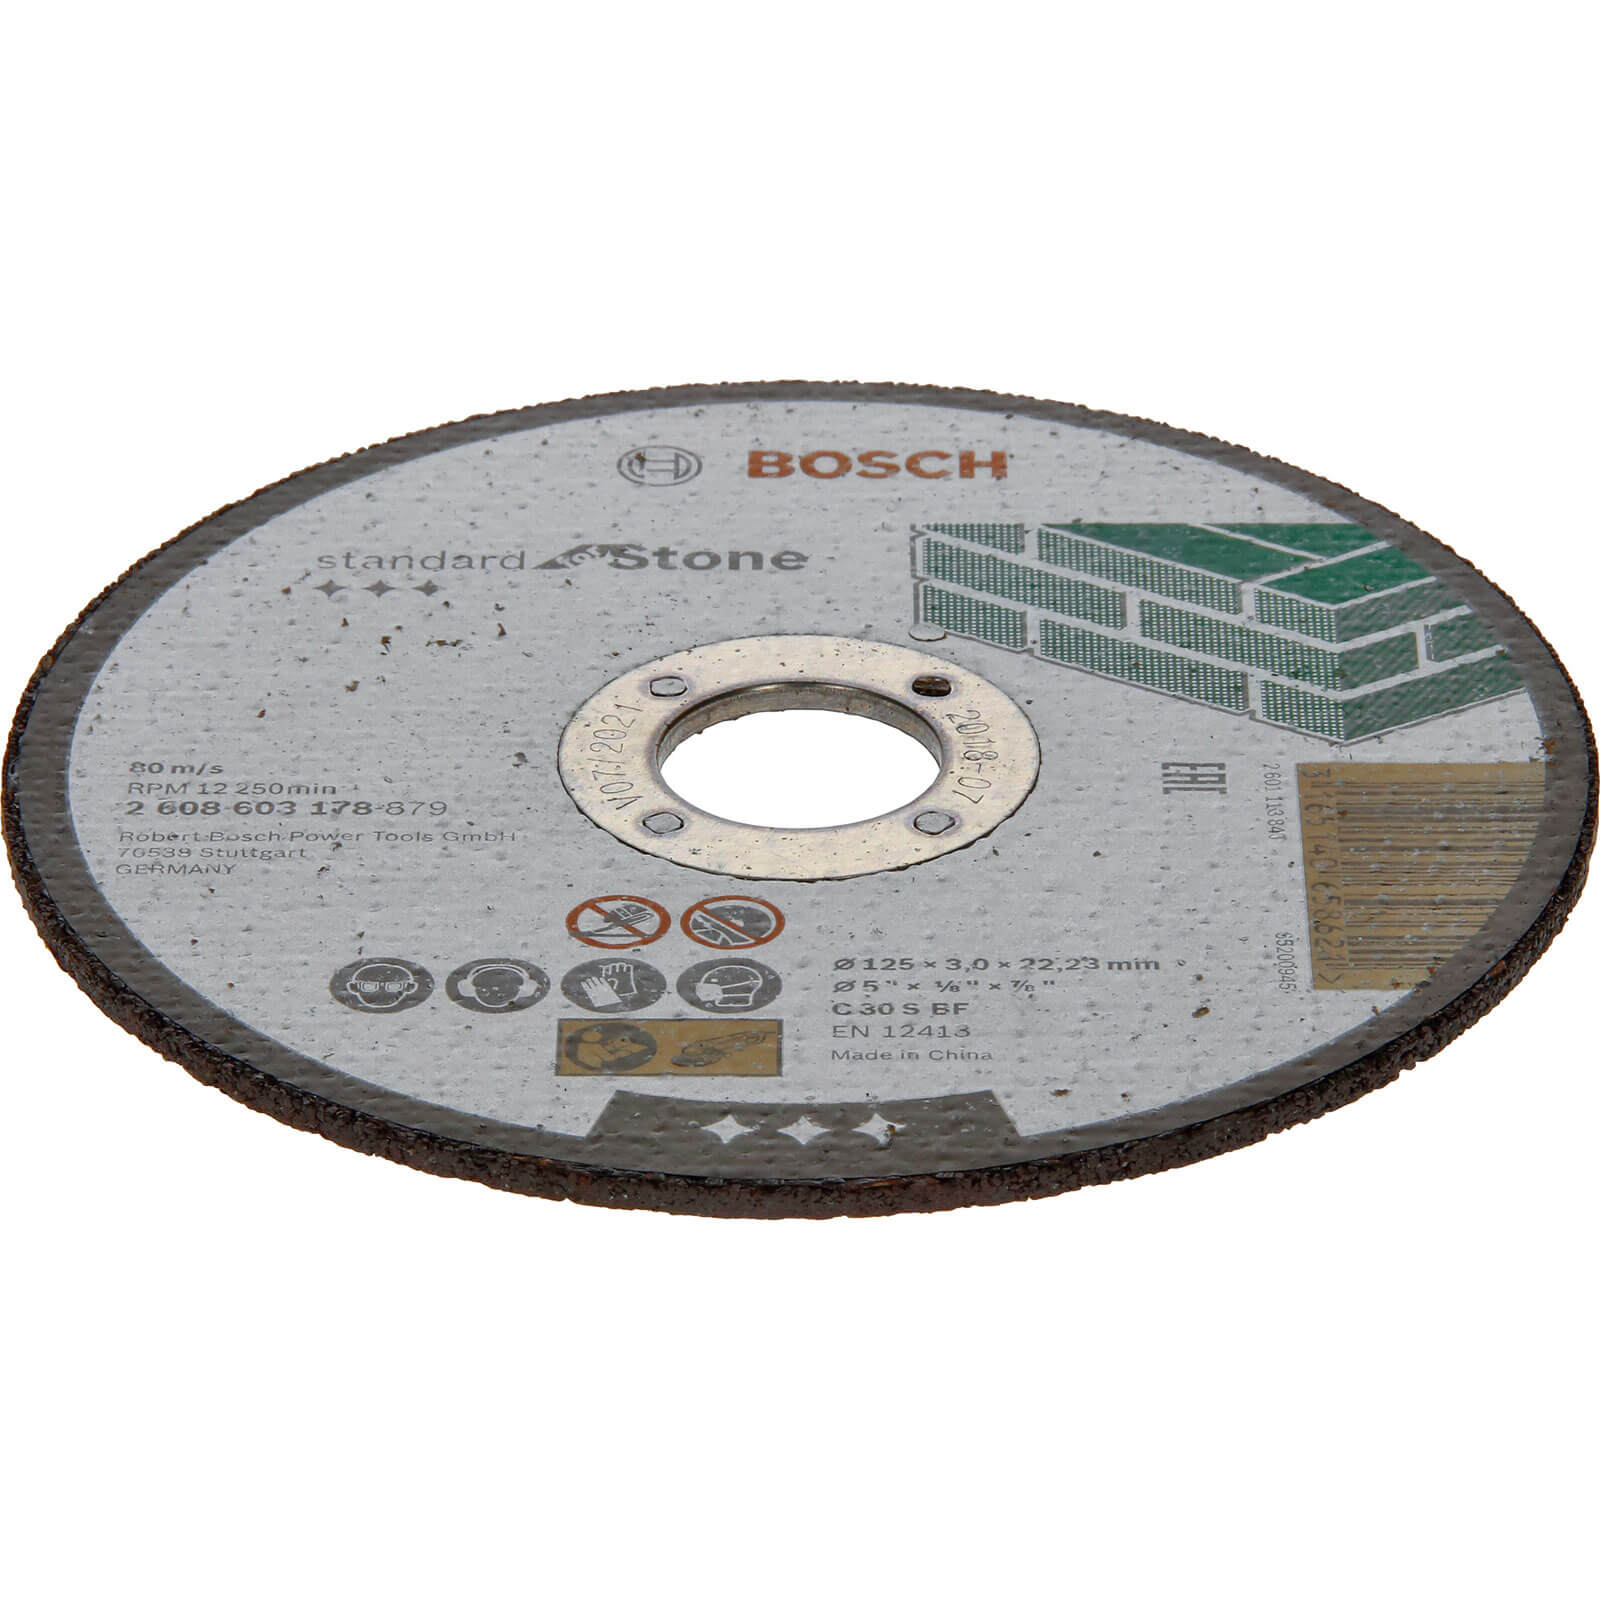 Photo of Bosch Standard Stone Cutting Disc 125mm 3mm 22mm